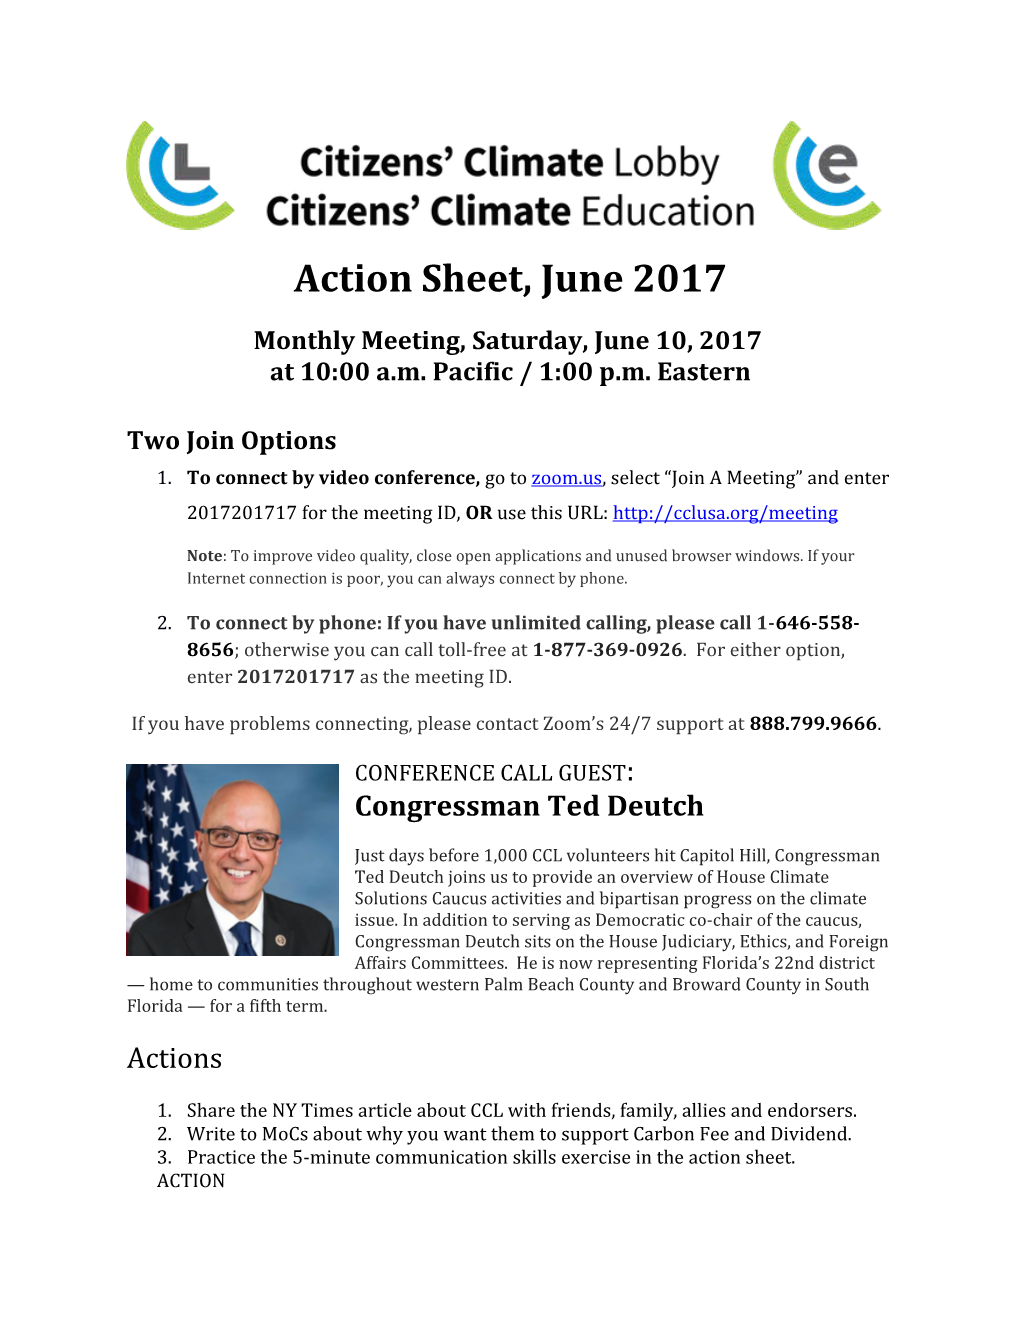 Monthly Meeting, Saturday, June 10, 2017